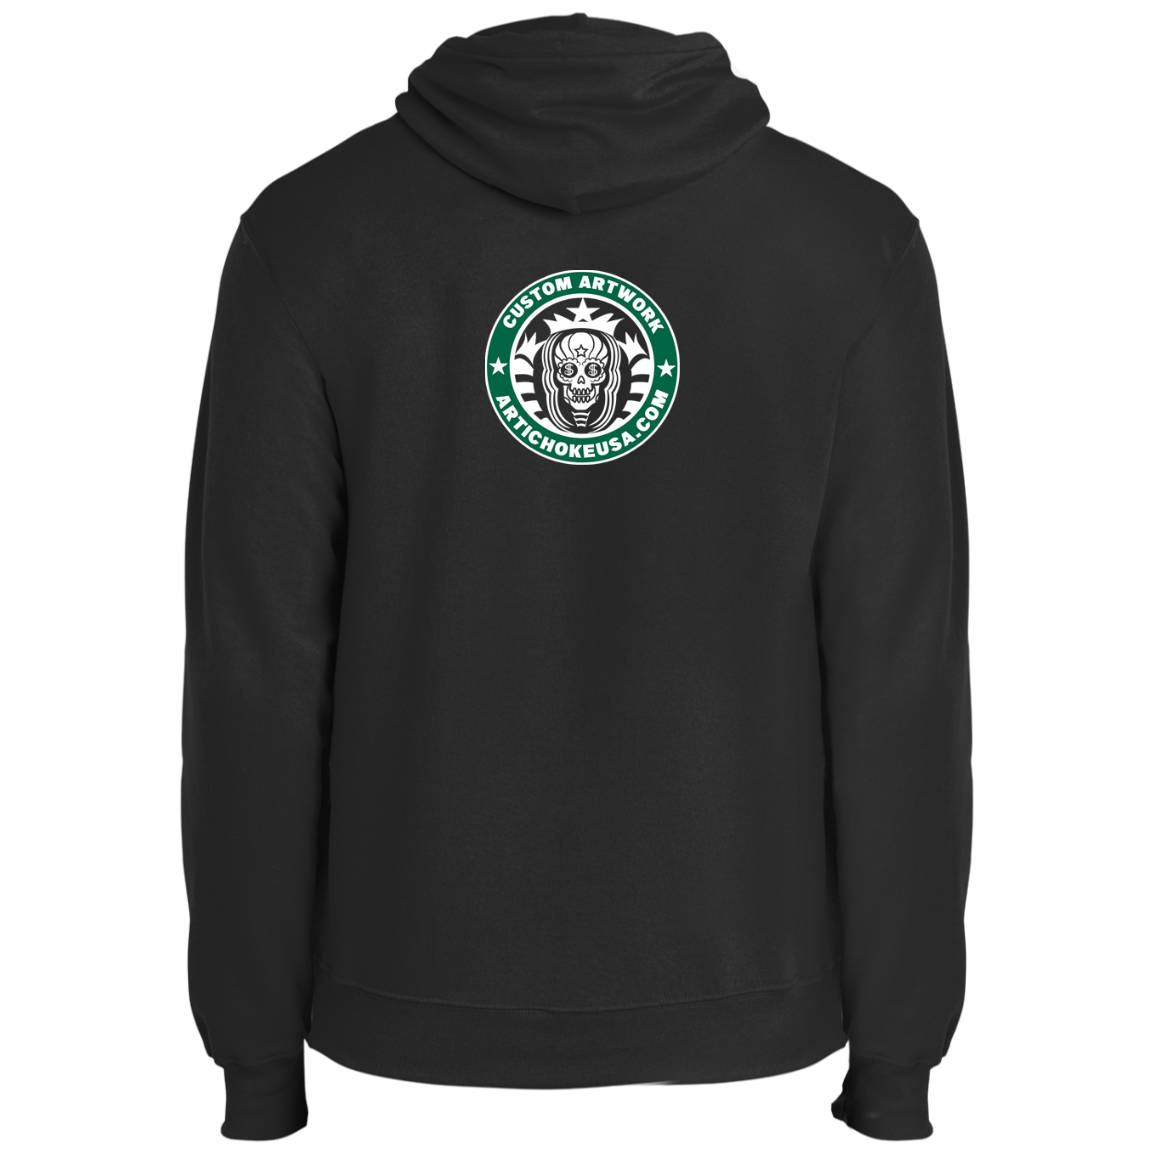 ArtichokeUSA Custom Design. Money Can't Buy Happiness But It Can Buy You Coffee. Fleece Pullover Hoodie